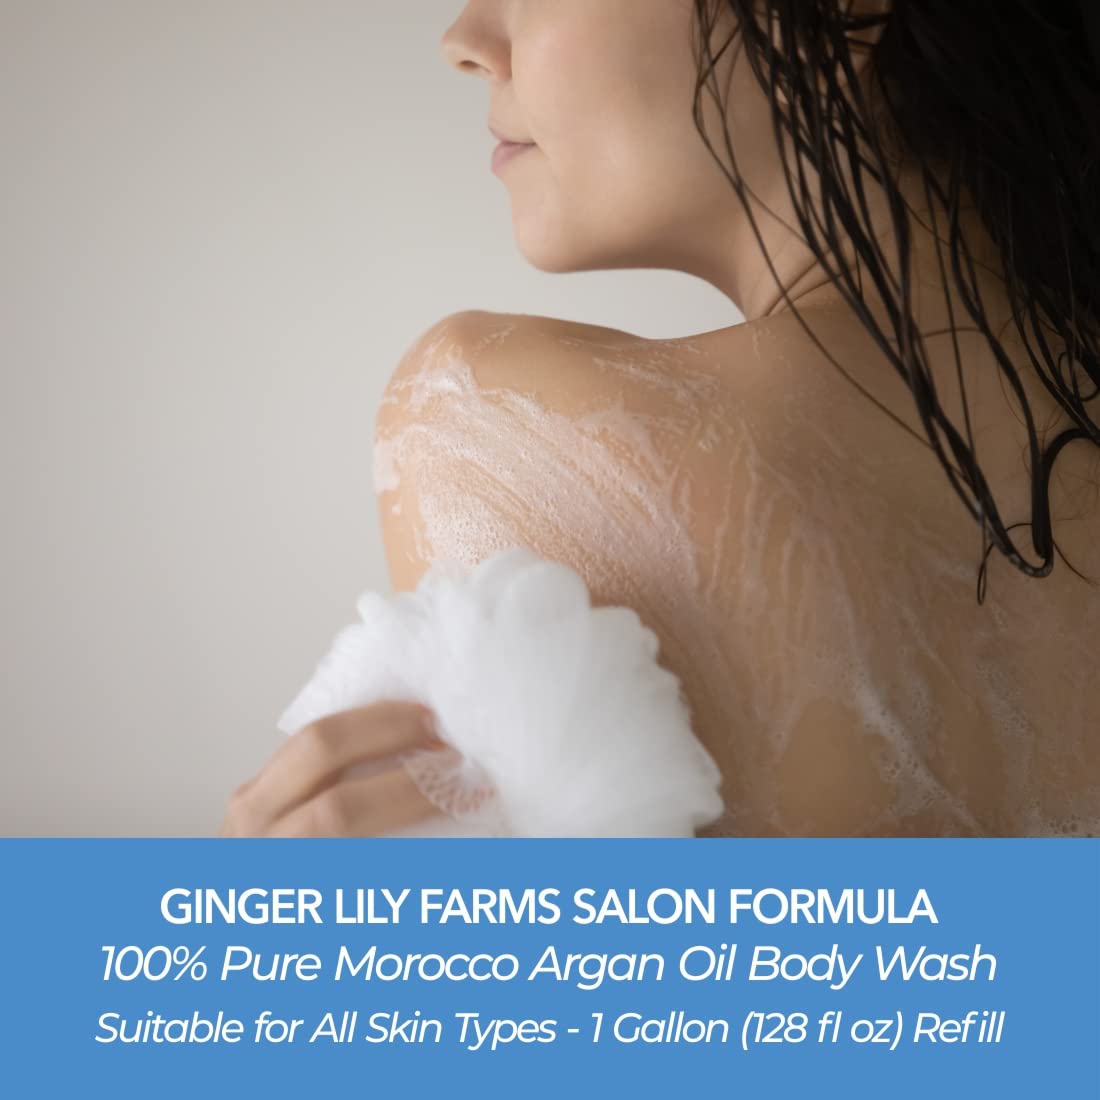 Ginger Lily Farms Salon Formula 100% Pure Morocco Argan Oil Body Wash for All Skin Types, 100% Vegan & Cruelty-Free, 1 Gallon (128 fl oz) Refill